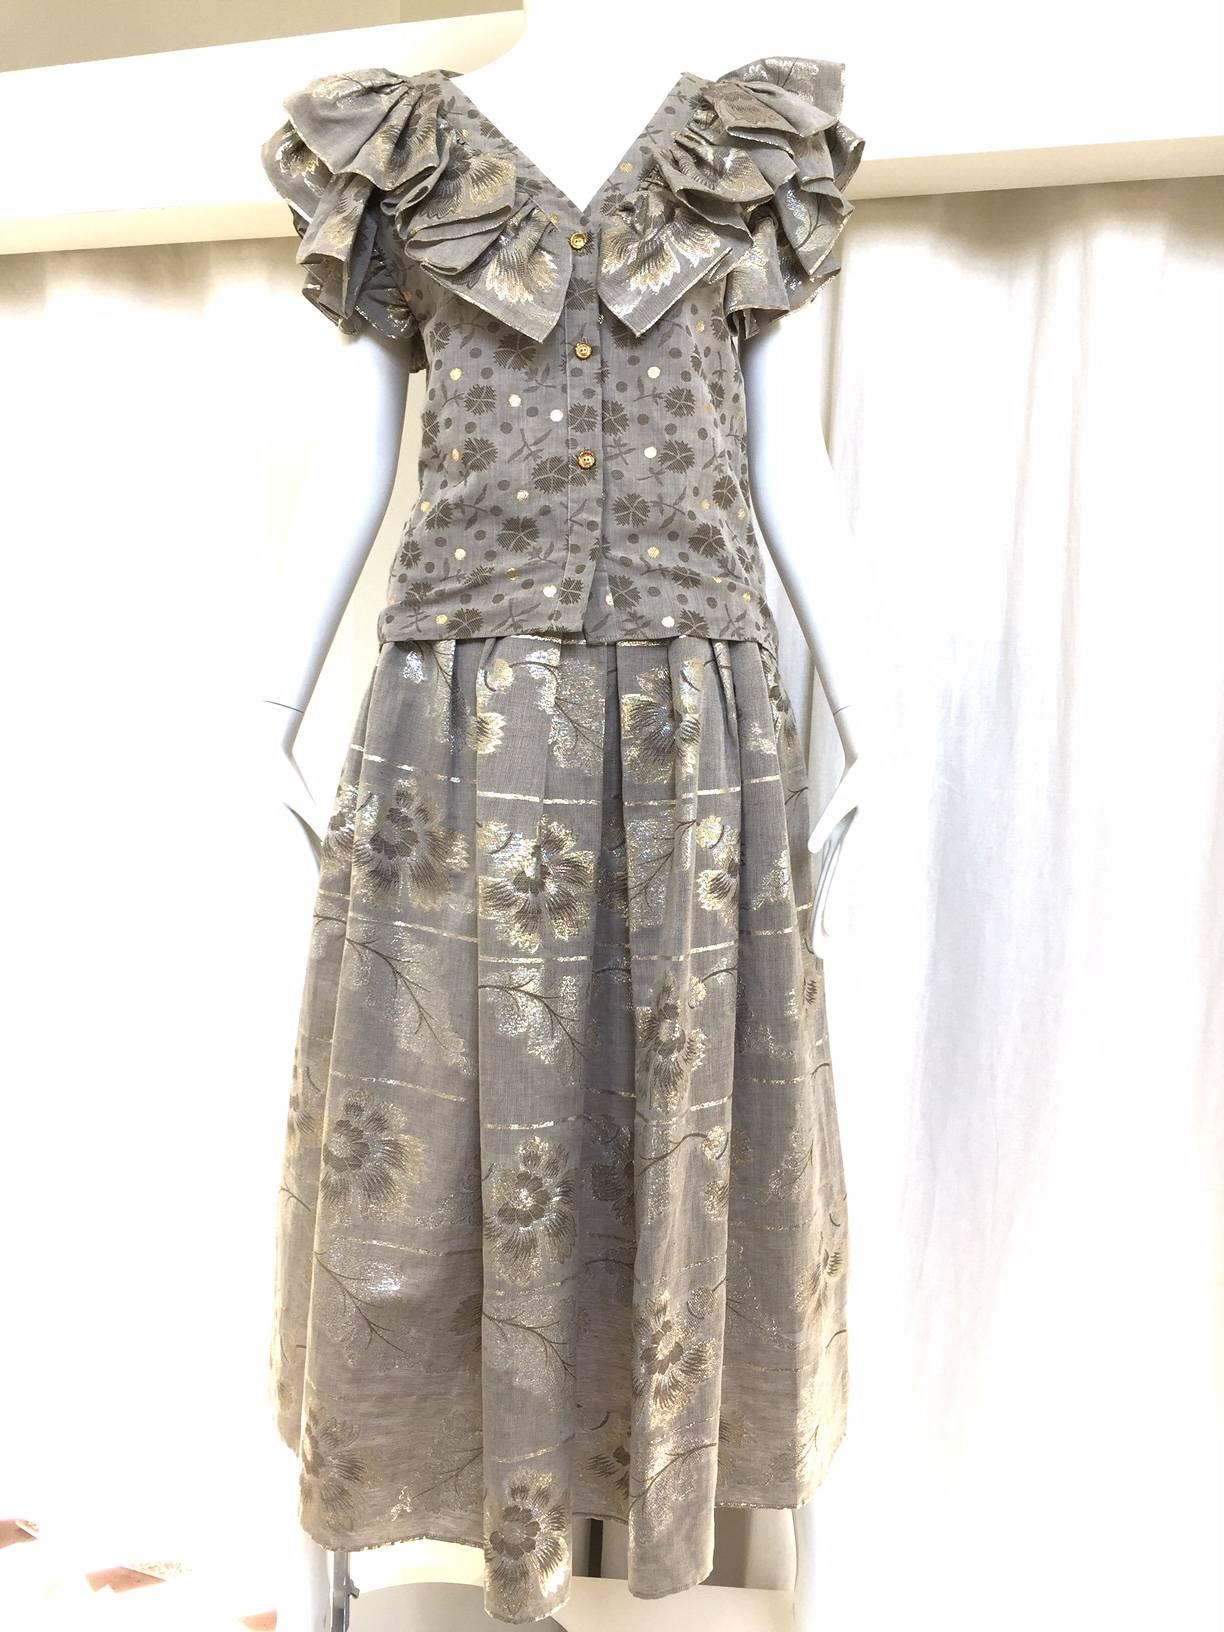 70s Oscar De La Renta grey and gold metallic linen 2 pcs.
Blouse measurement: Bust: 36
Skirt waist: 26